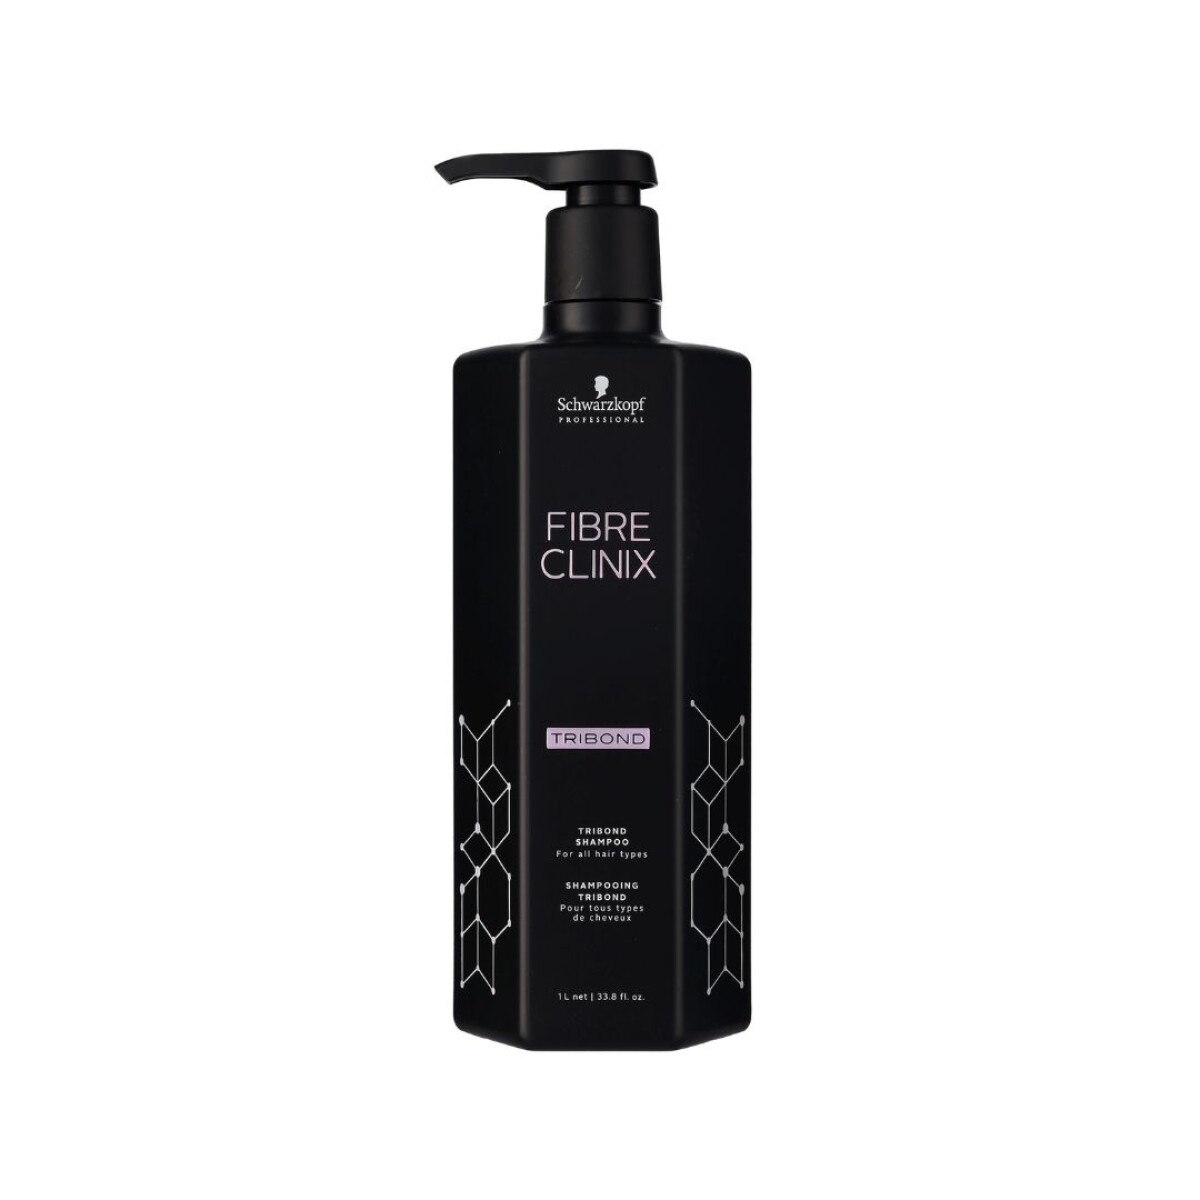 Fibre Clinix Shampoo 1000ml - 1000ml 